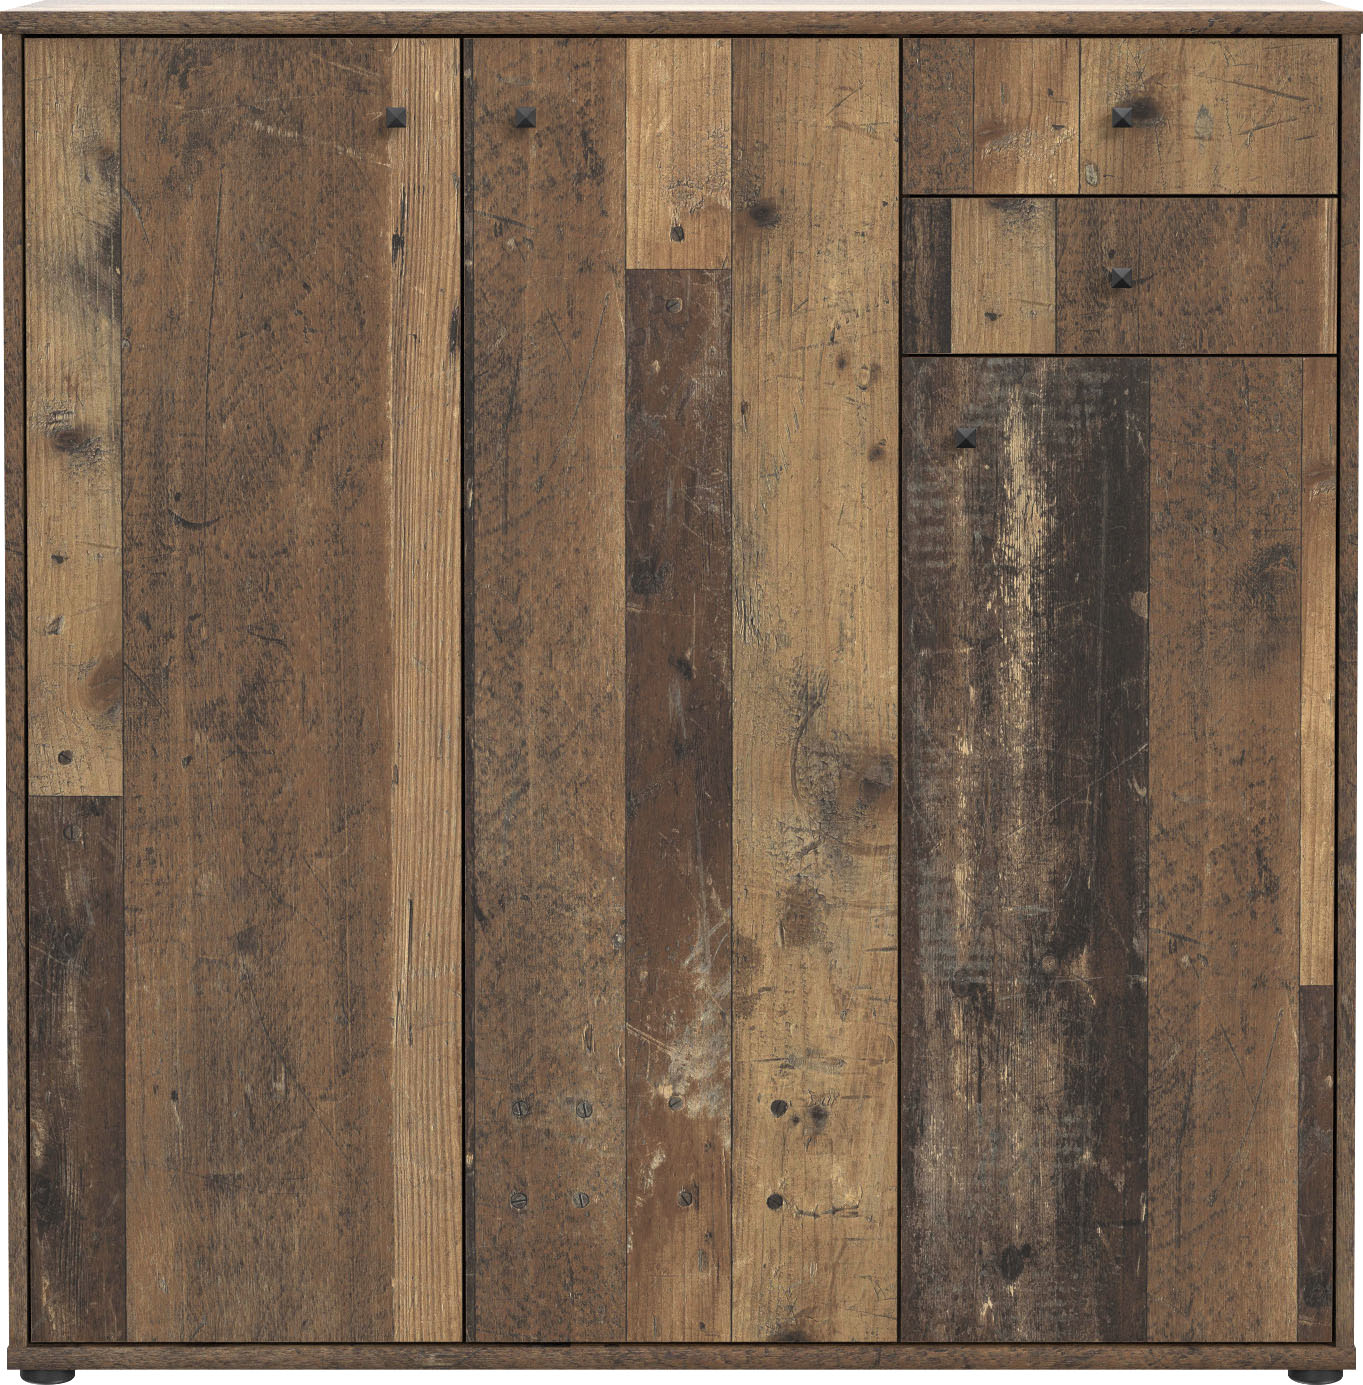 Kommode "Tempra", Breite 108,8 cm, old wood Vintage B/H/T: 108,8 cm x 111,1 cm x 34,8 cm